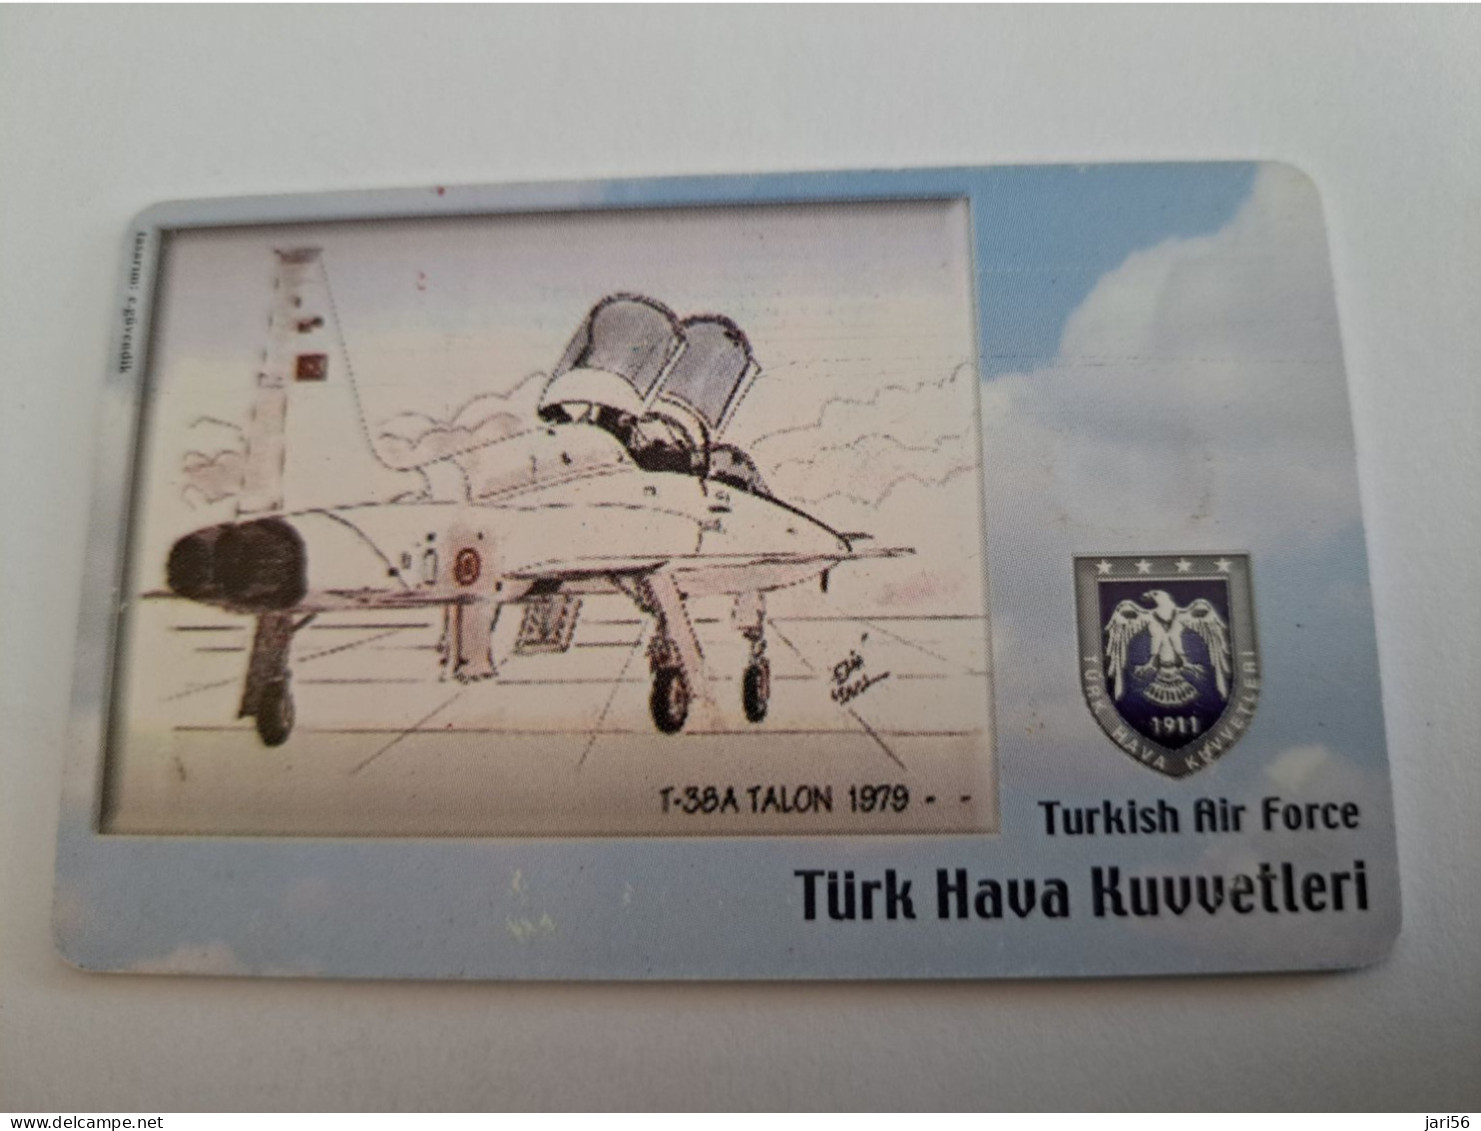 TURKIJE / 50 UNITS/ CHIPCARD/ TURKISH AIR FORCE  / DIFFERENT PLANES /        Fine Used Card  **15444** - Türkei